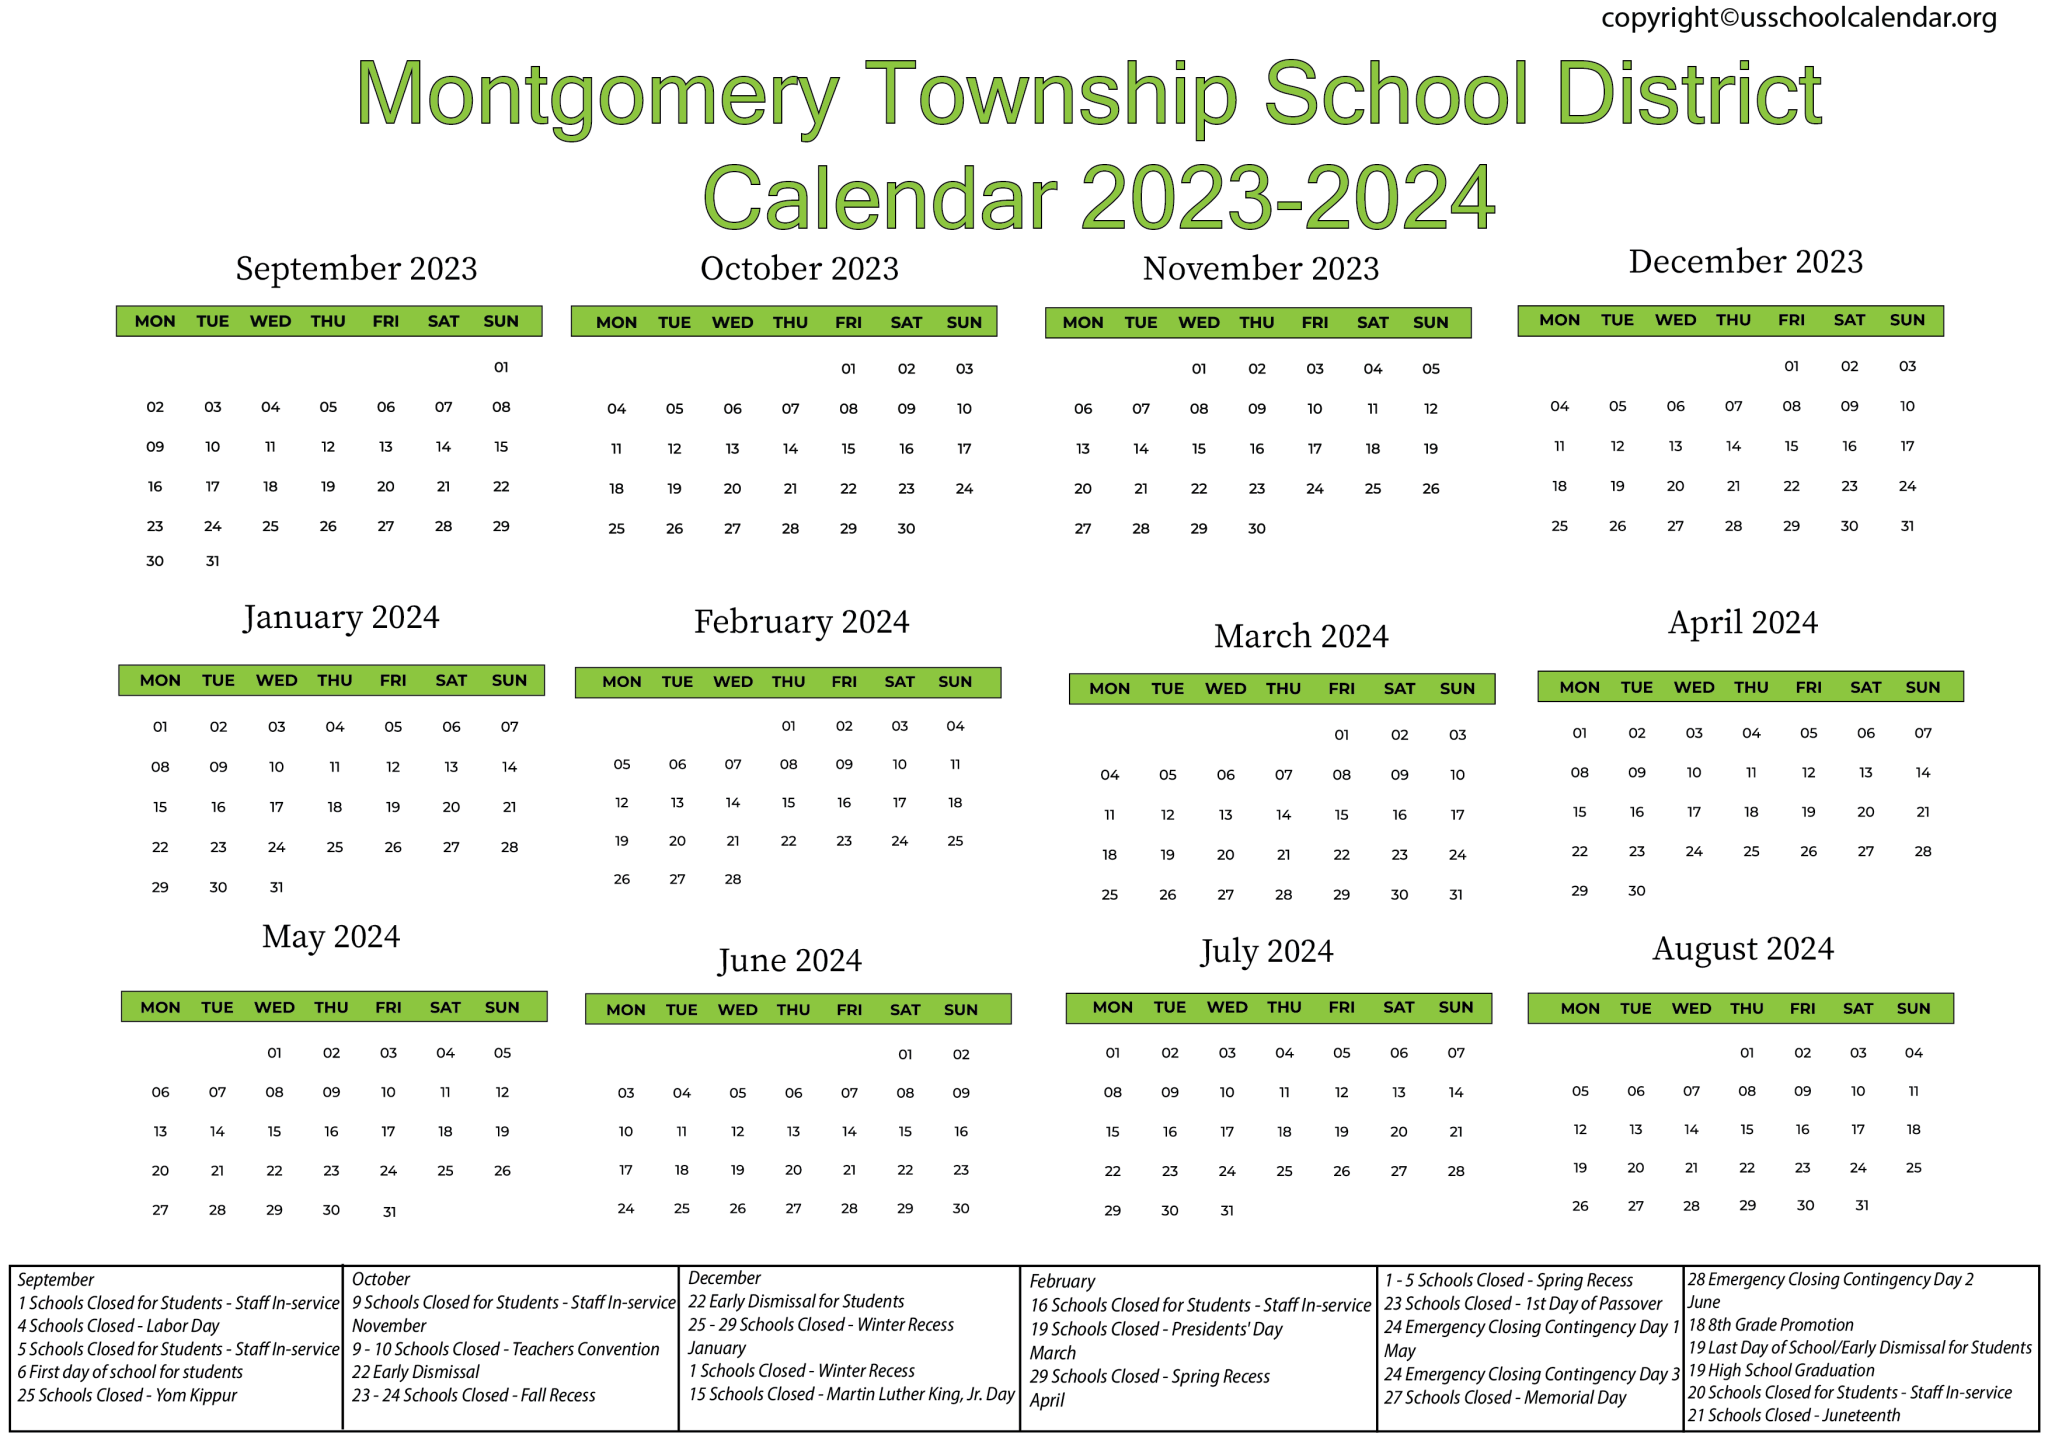 [MTSD] Montgomery Township School District Calendar 20232024